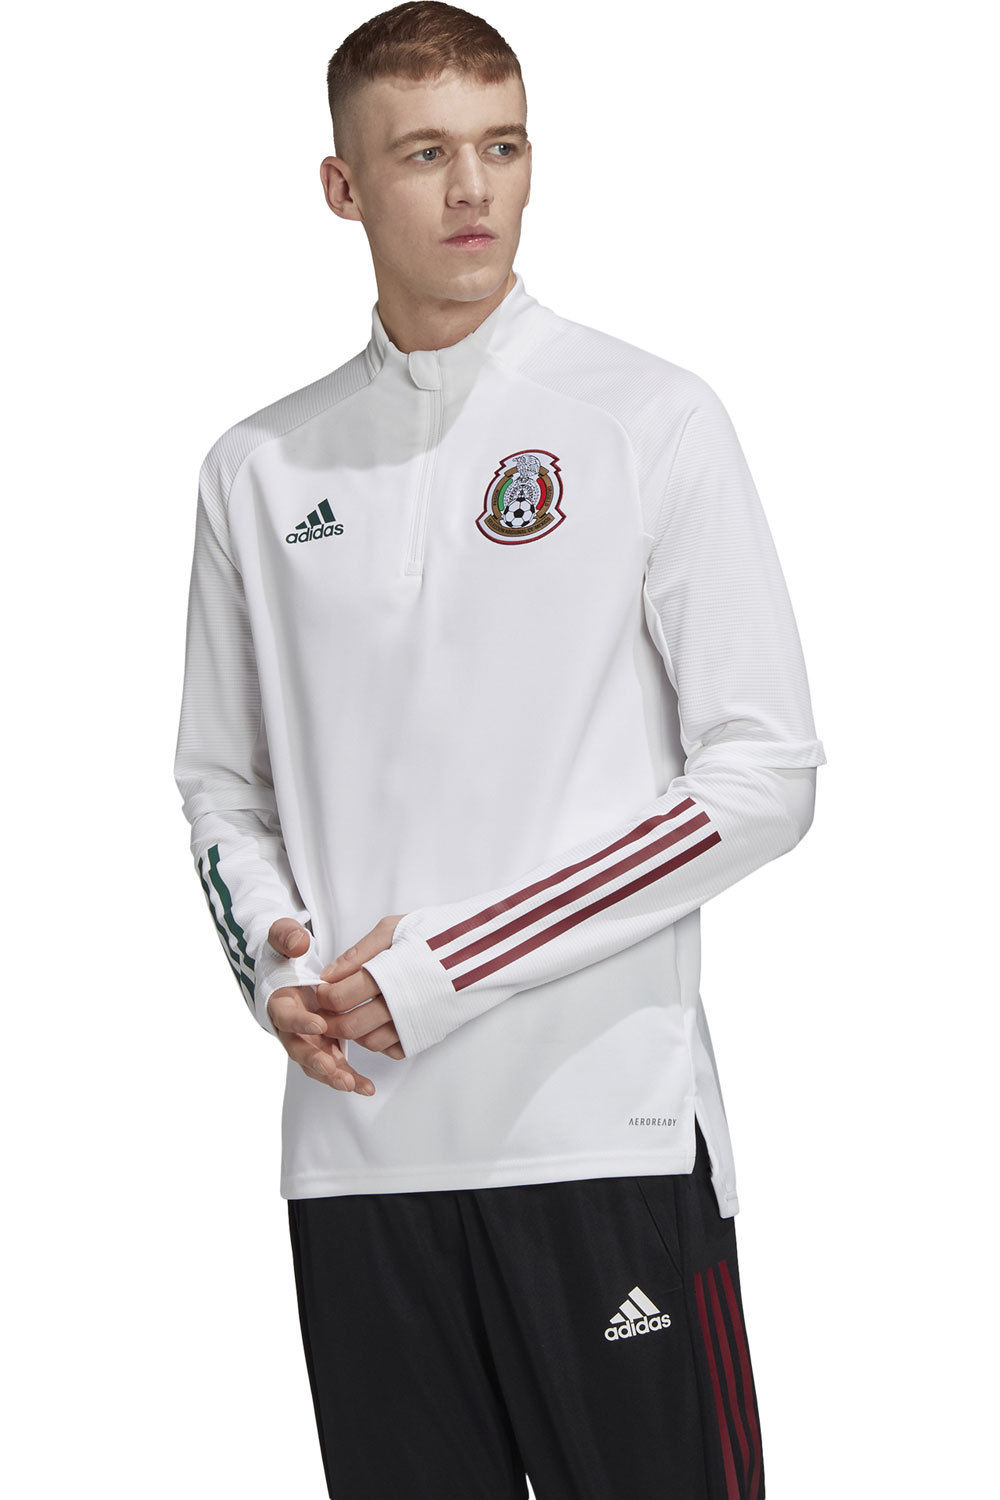 Camisetas fútbol manga larga hombre mexico 21 trg top